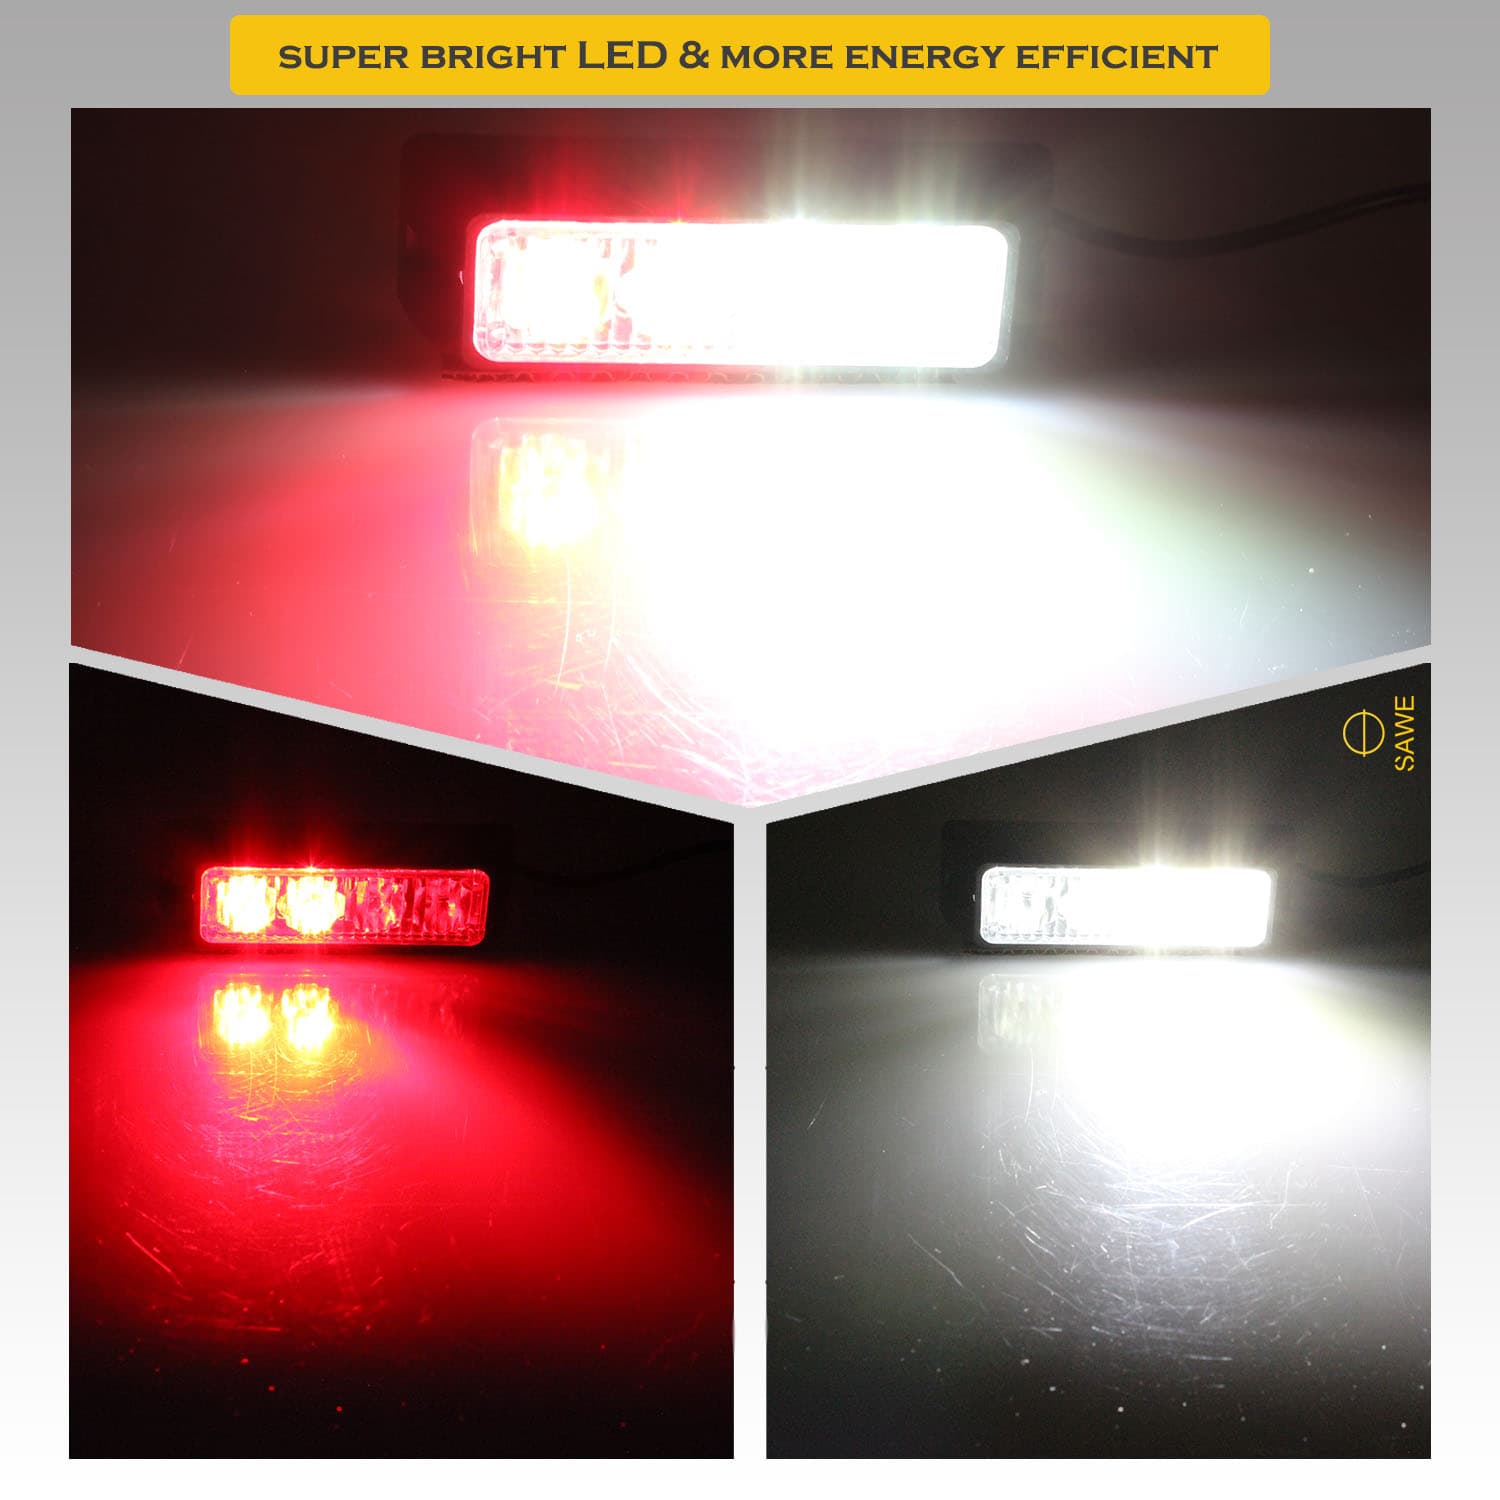 Premier Emergency LED Strobe Lights Bar for Offroad Car Truck Warning Hazard Flash Grille and Surface Mount Light - Red / White 4-LED